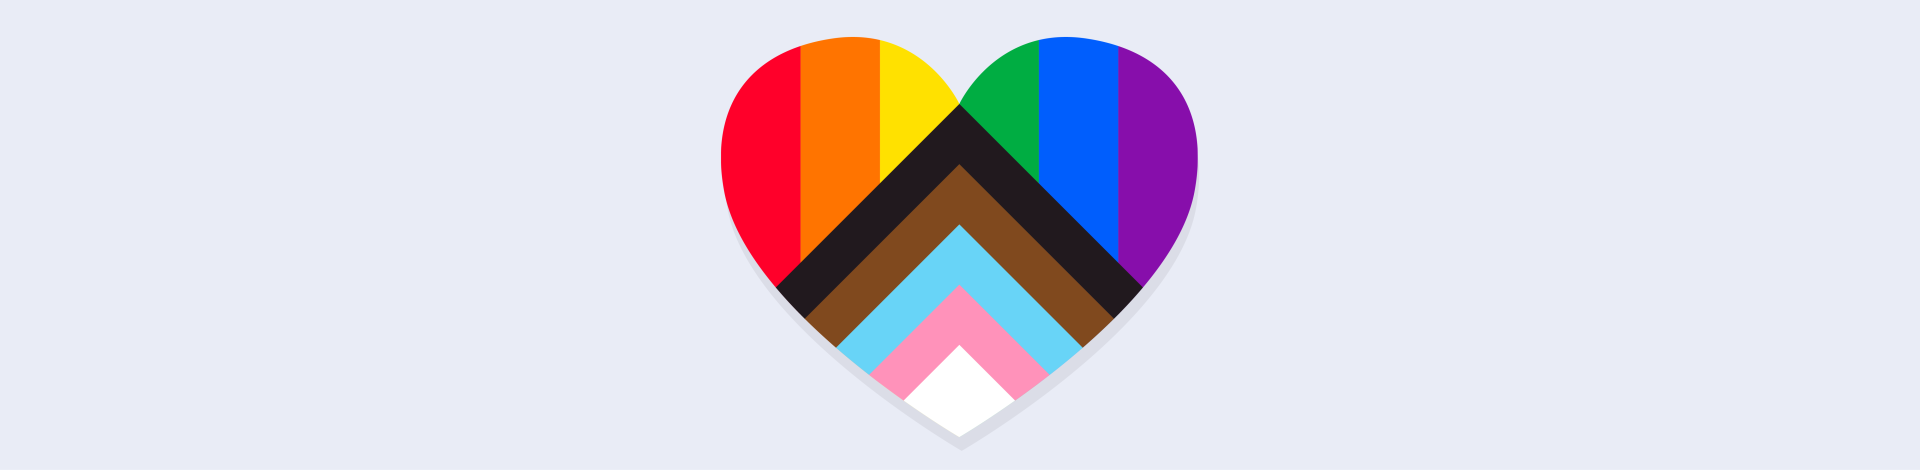 Updated pride LGBTQ2+ flag inside heart